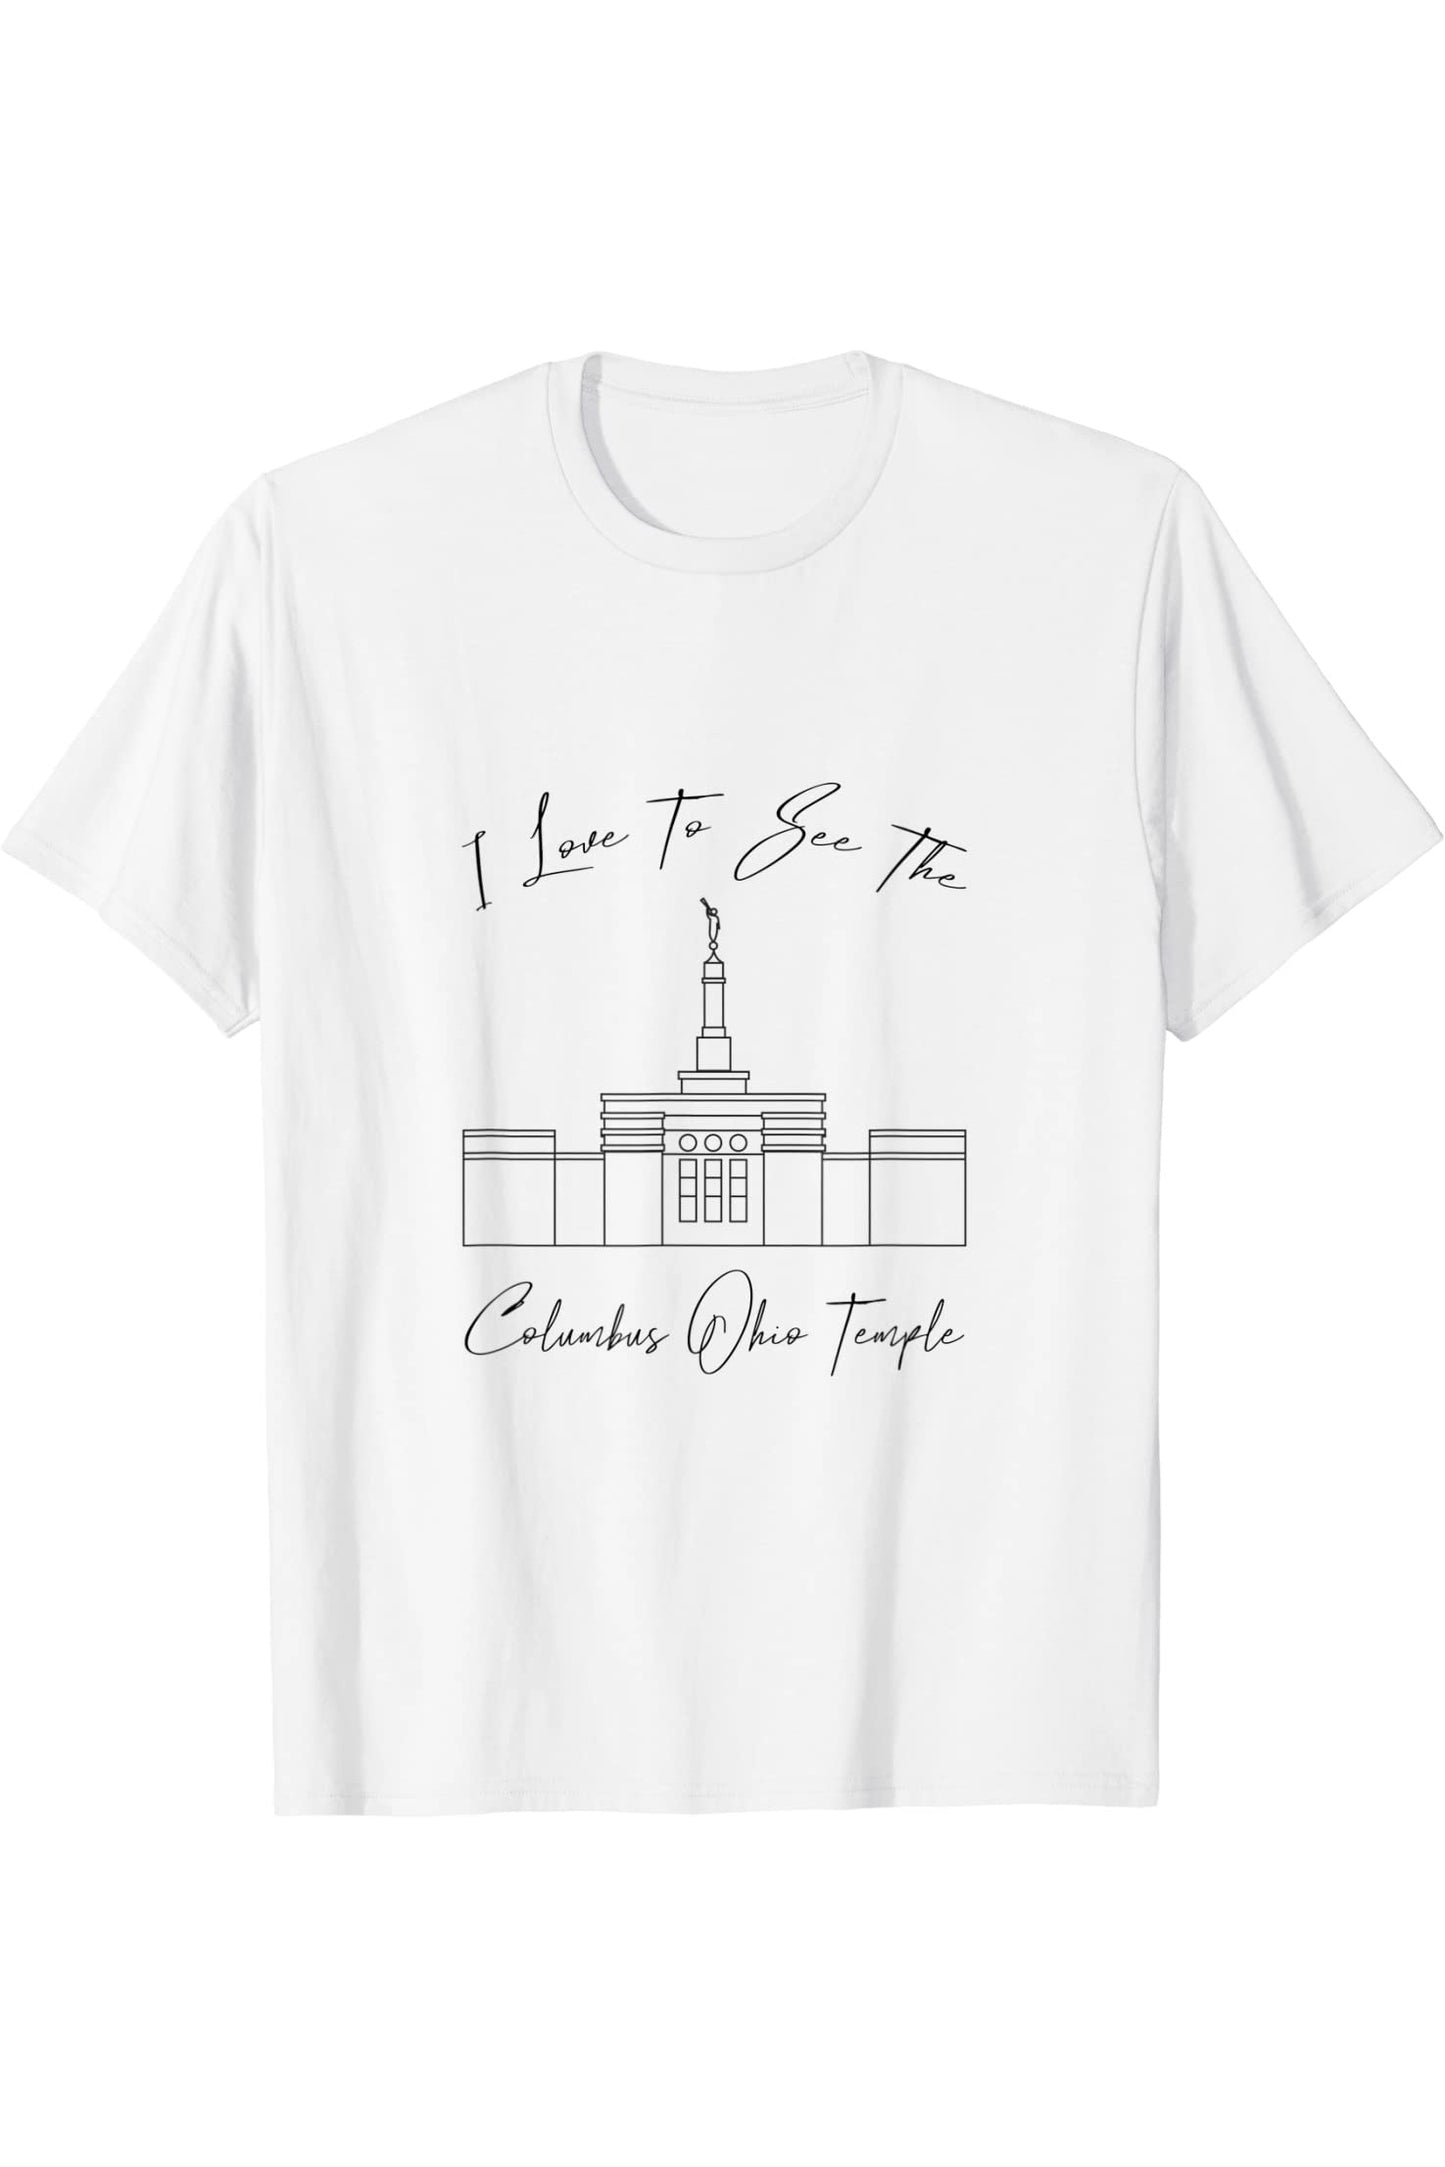 Columbus Ohio Temple T-Shirt - Calligraphy Style (English) US